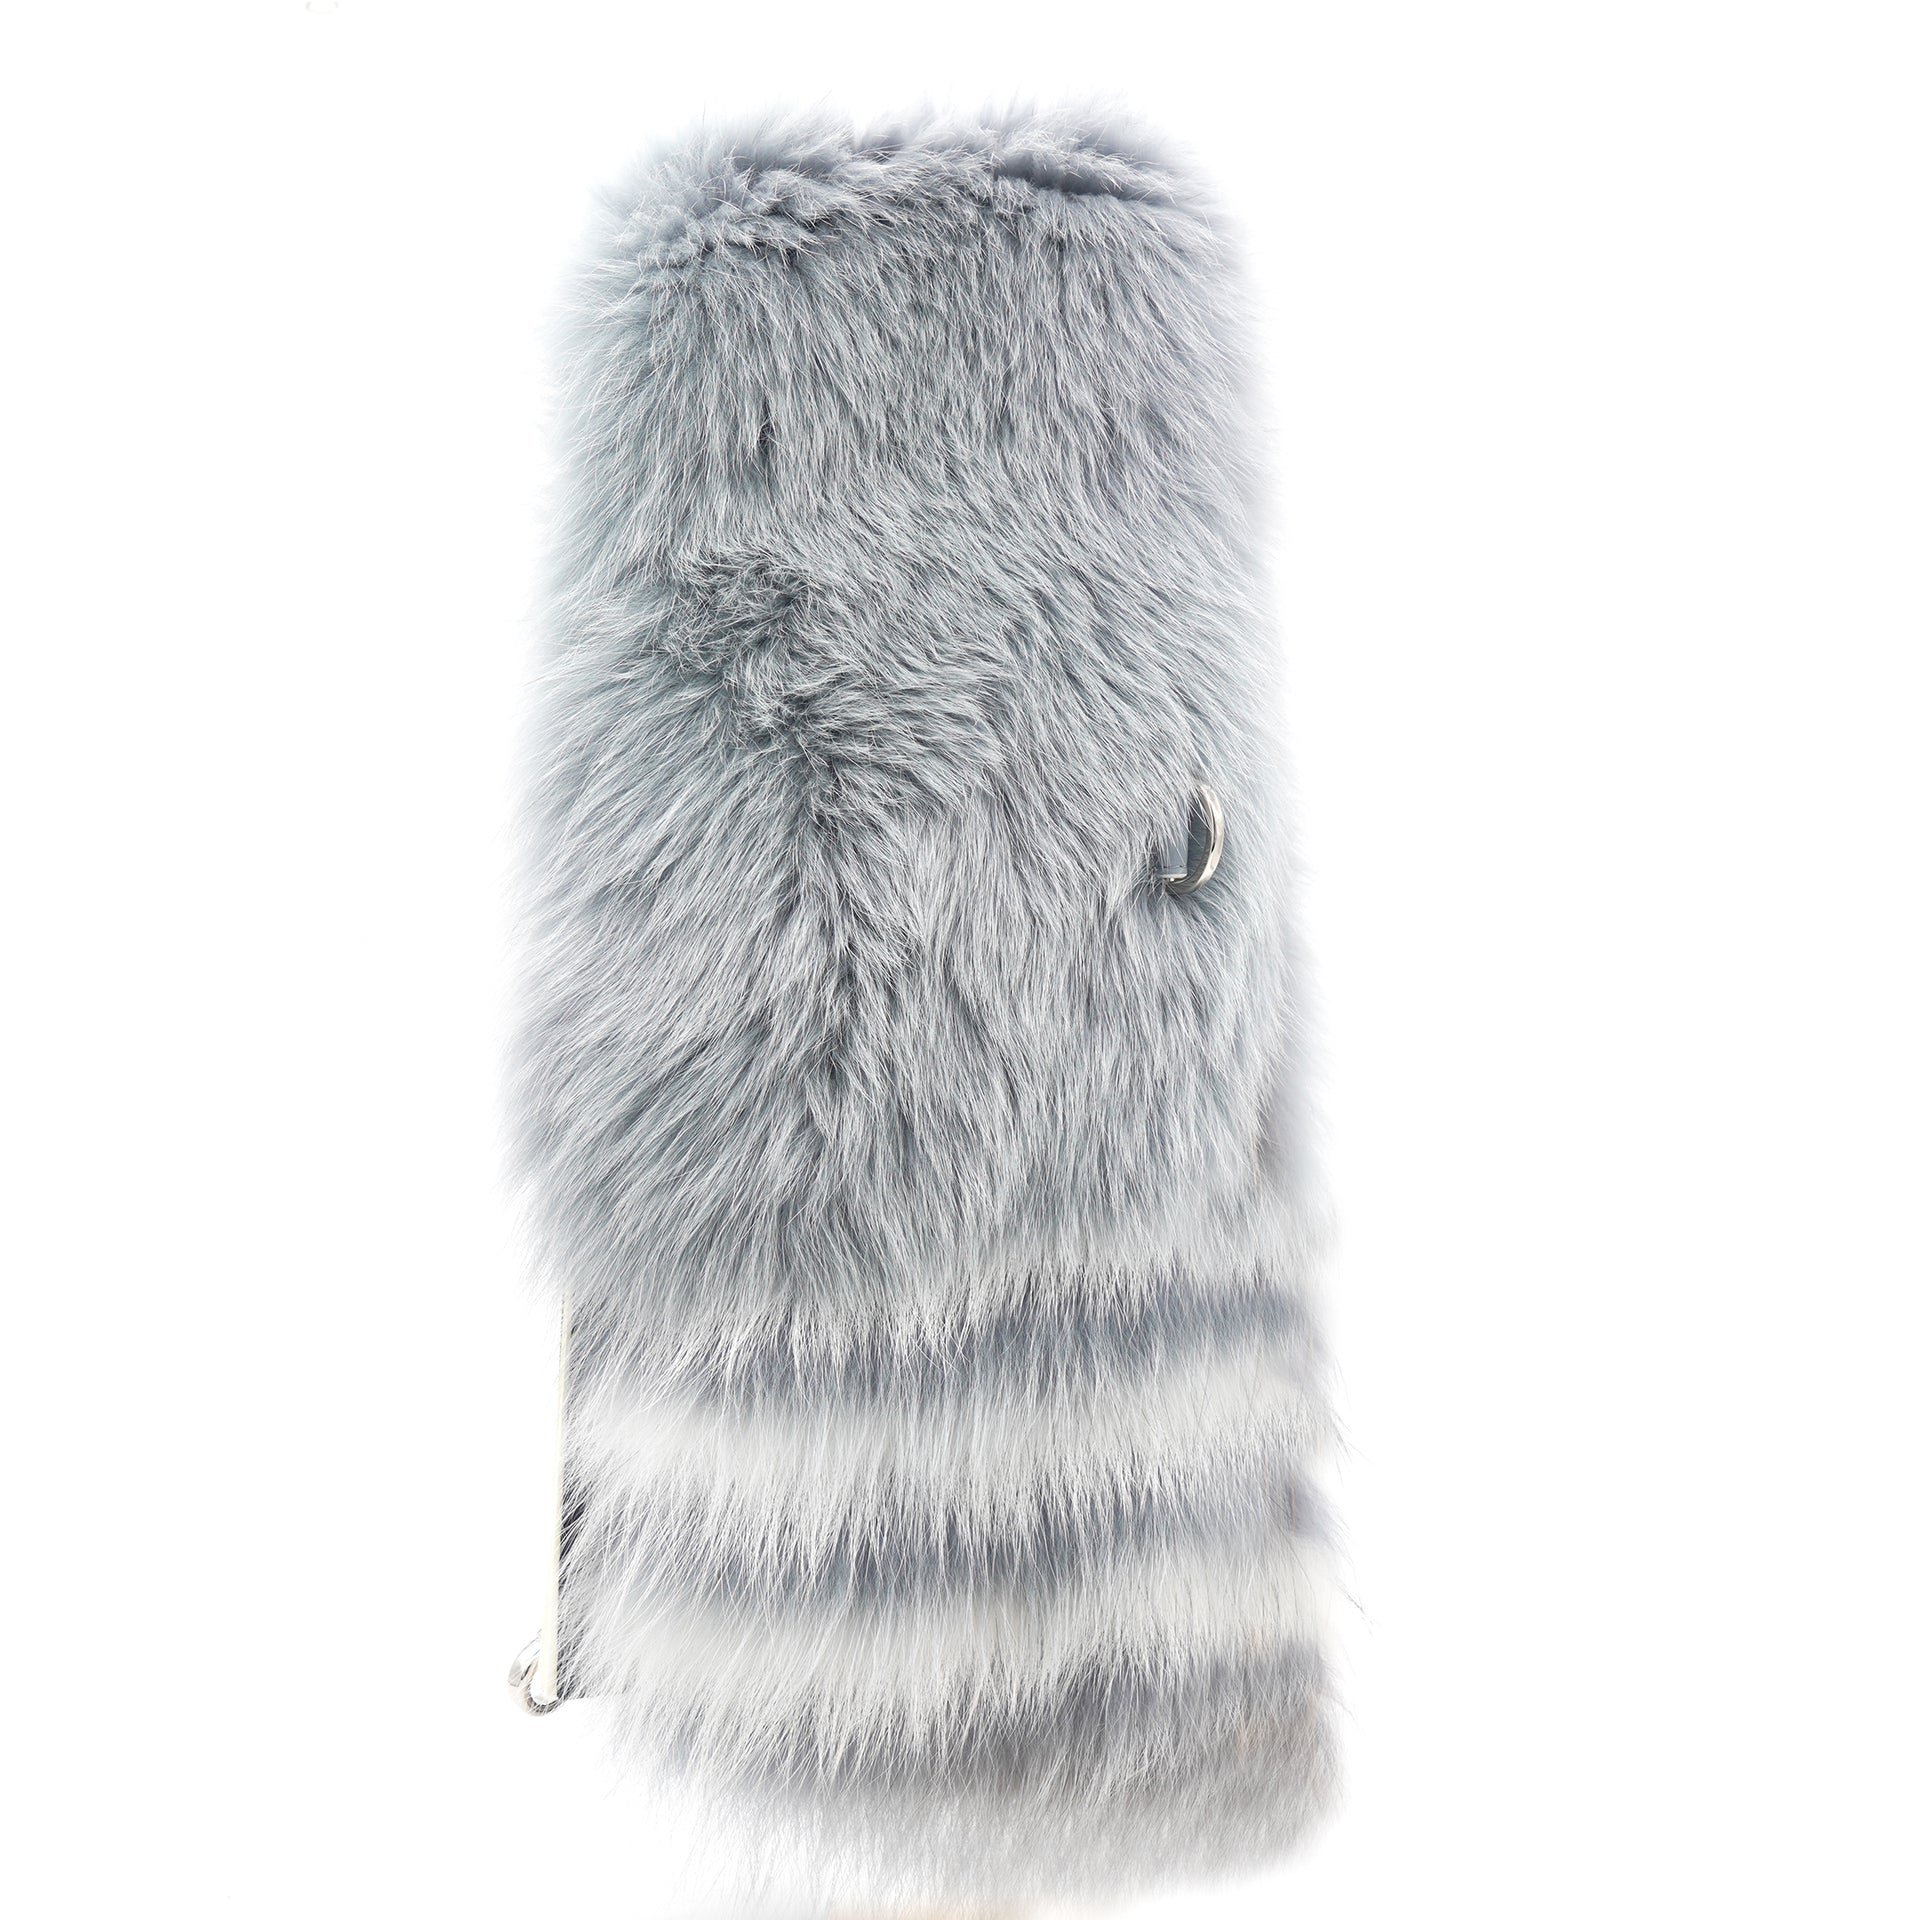 Grey/White Fox Fur Stole